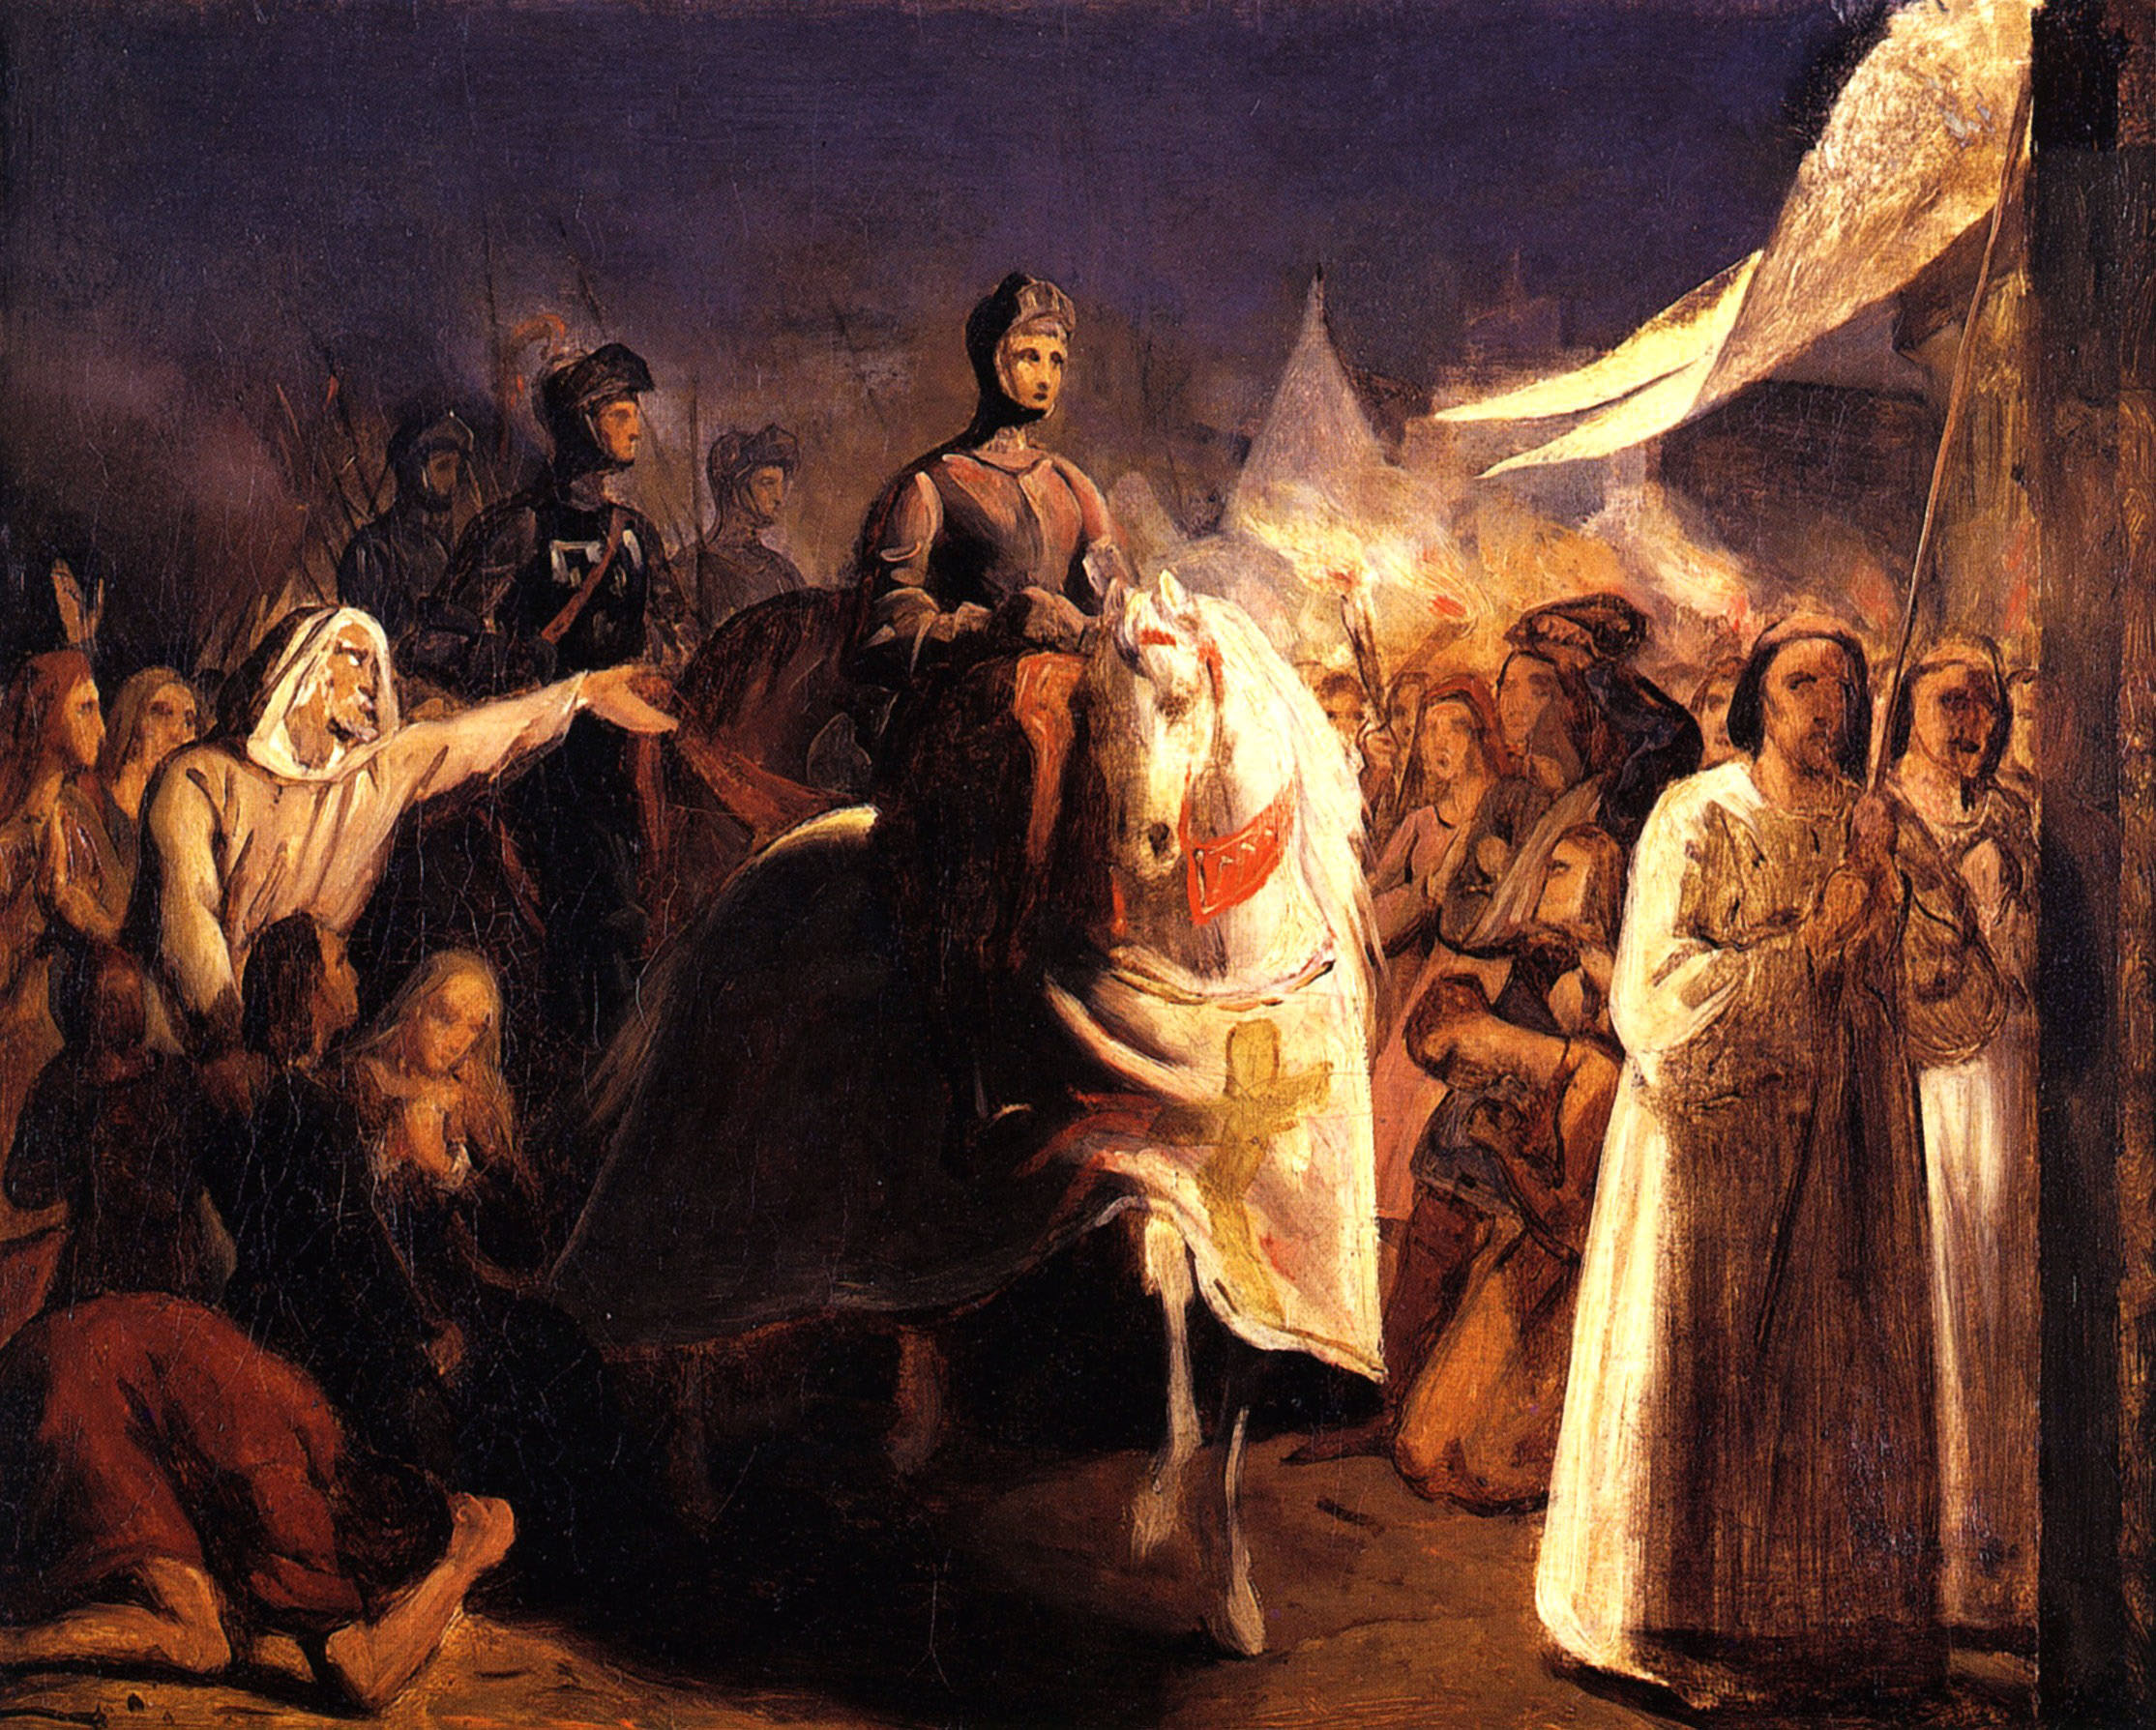 Анри Шиффер. "Въезд Жанны д'Арк в Орлеан 8 мая 1429 года".